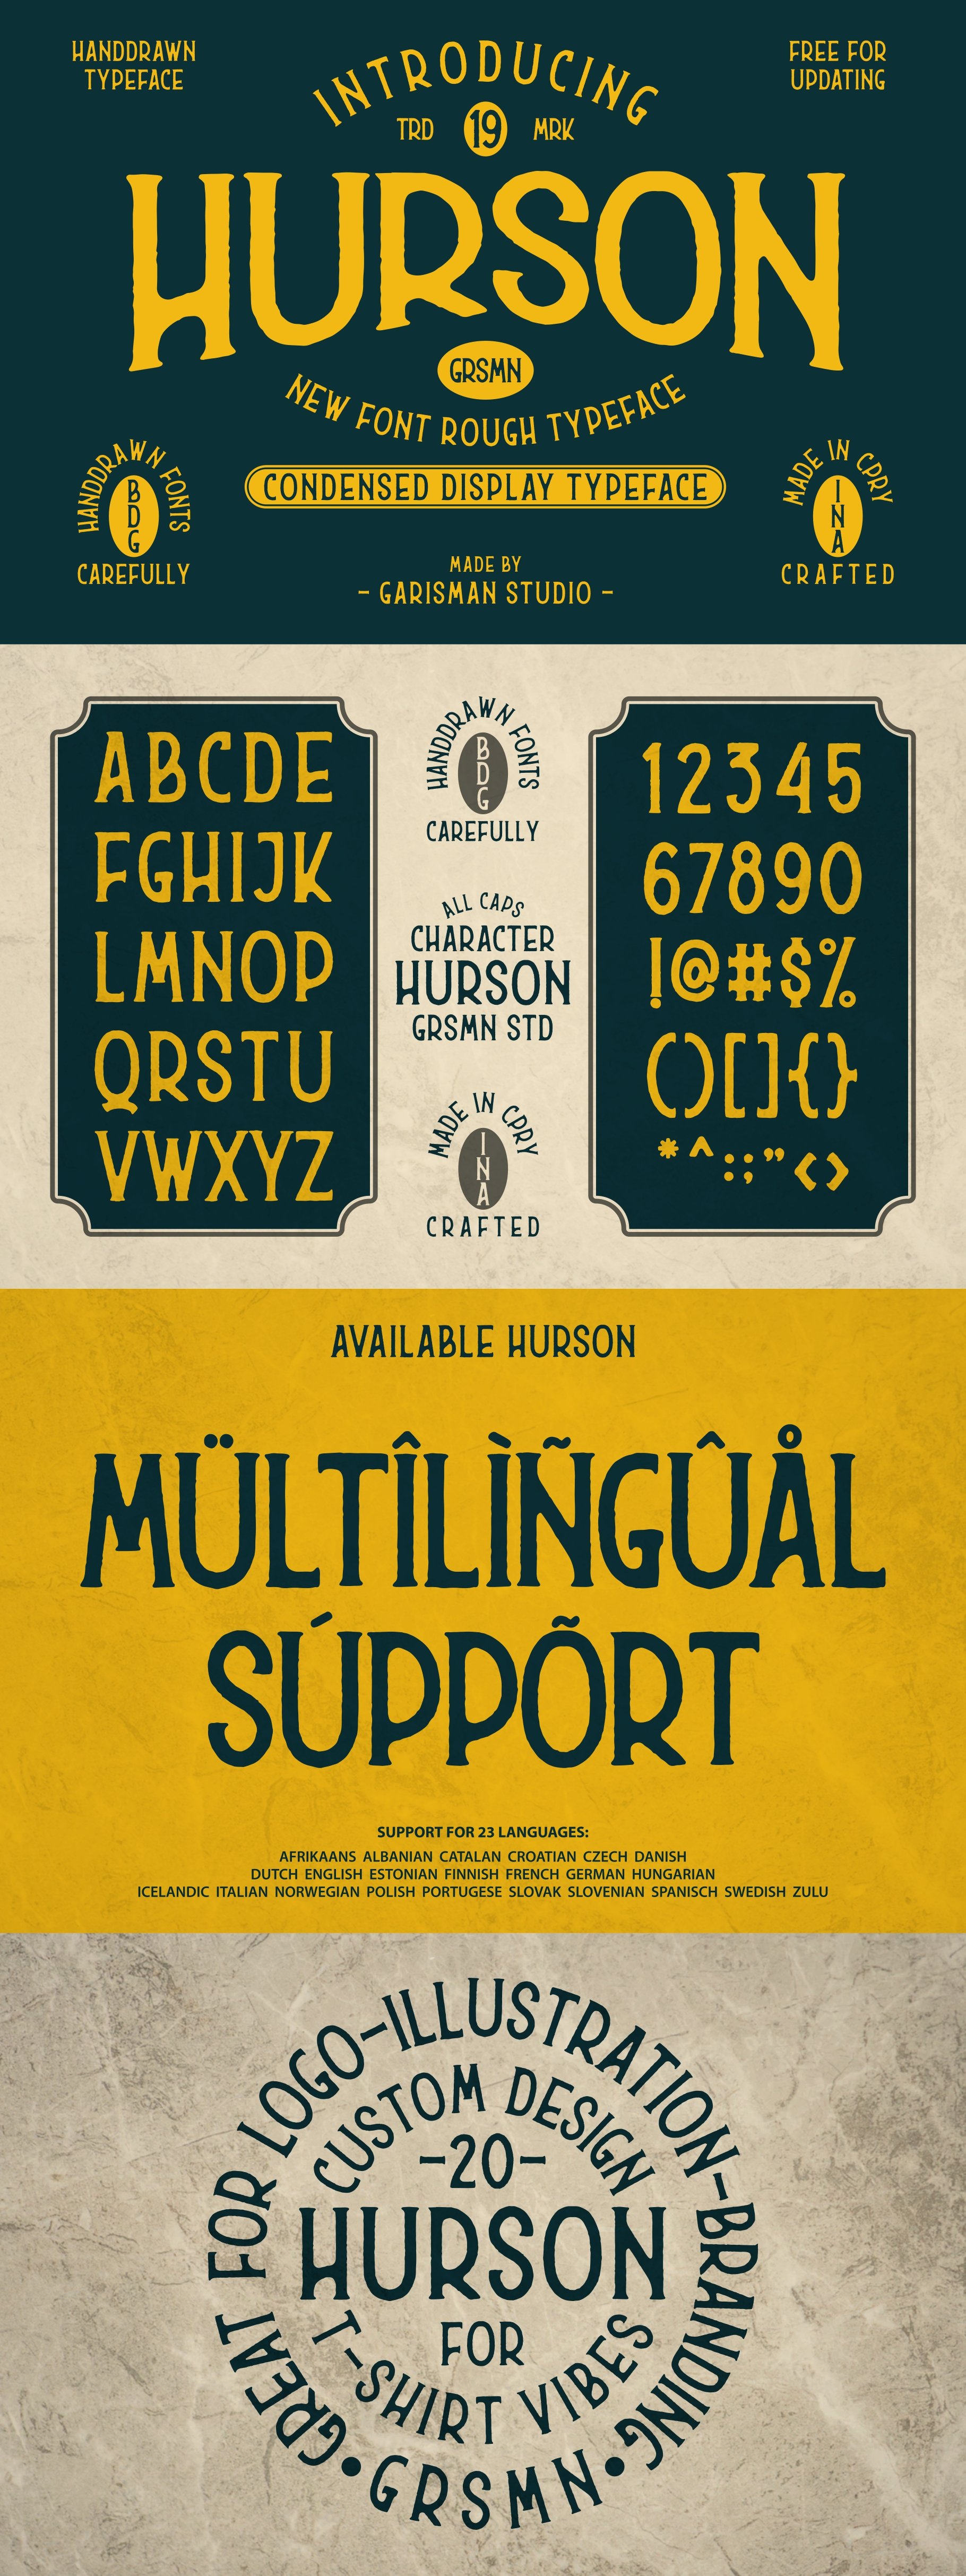 Hurson Rough - Serif cover image.